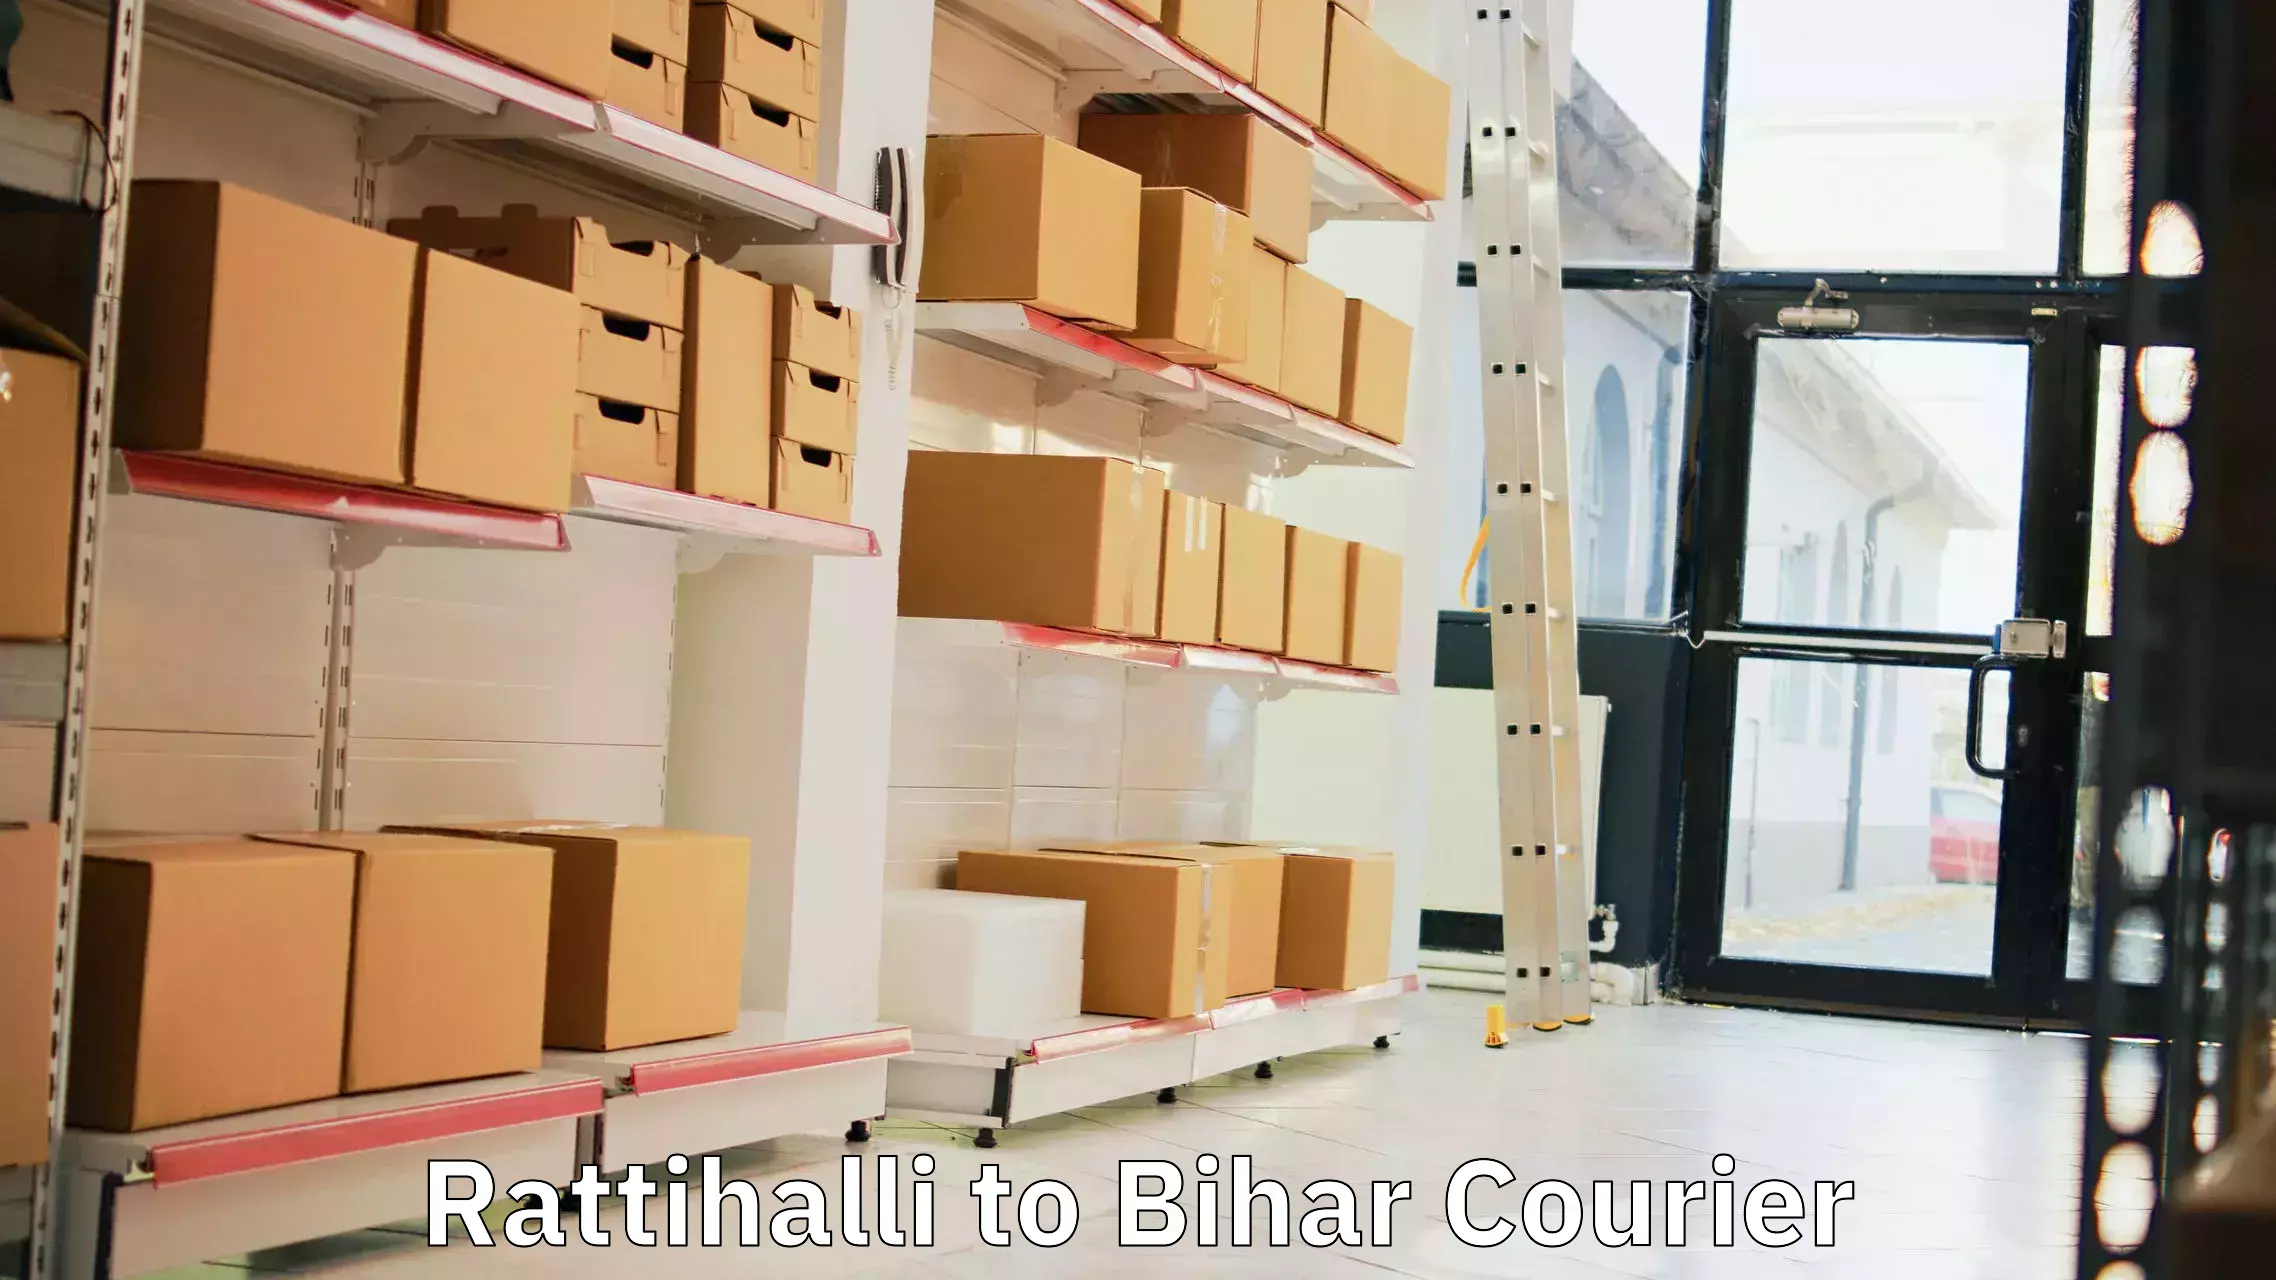 Courier insurance Rattihalli to Bihar